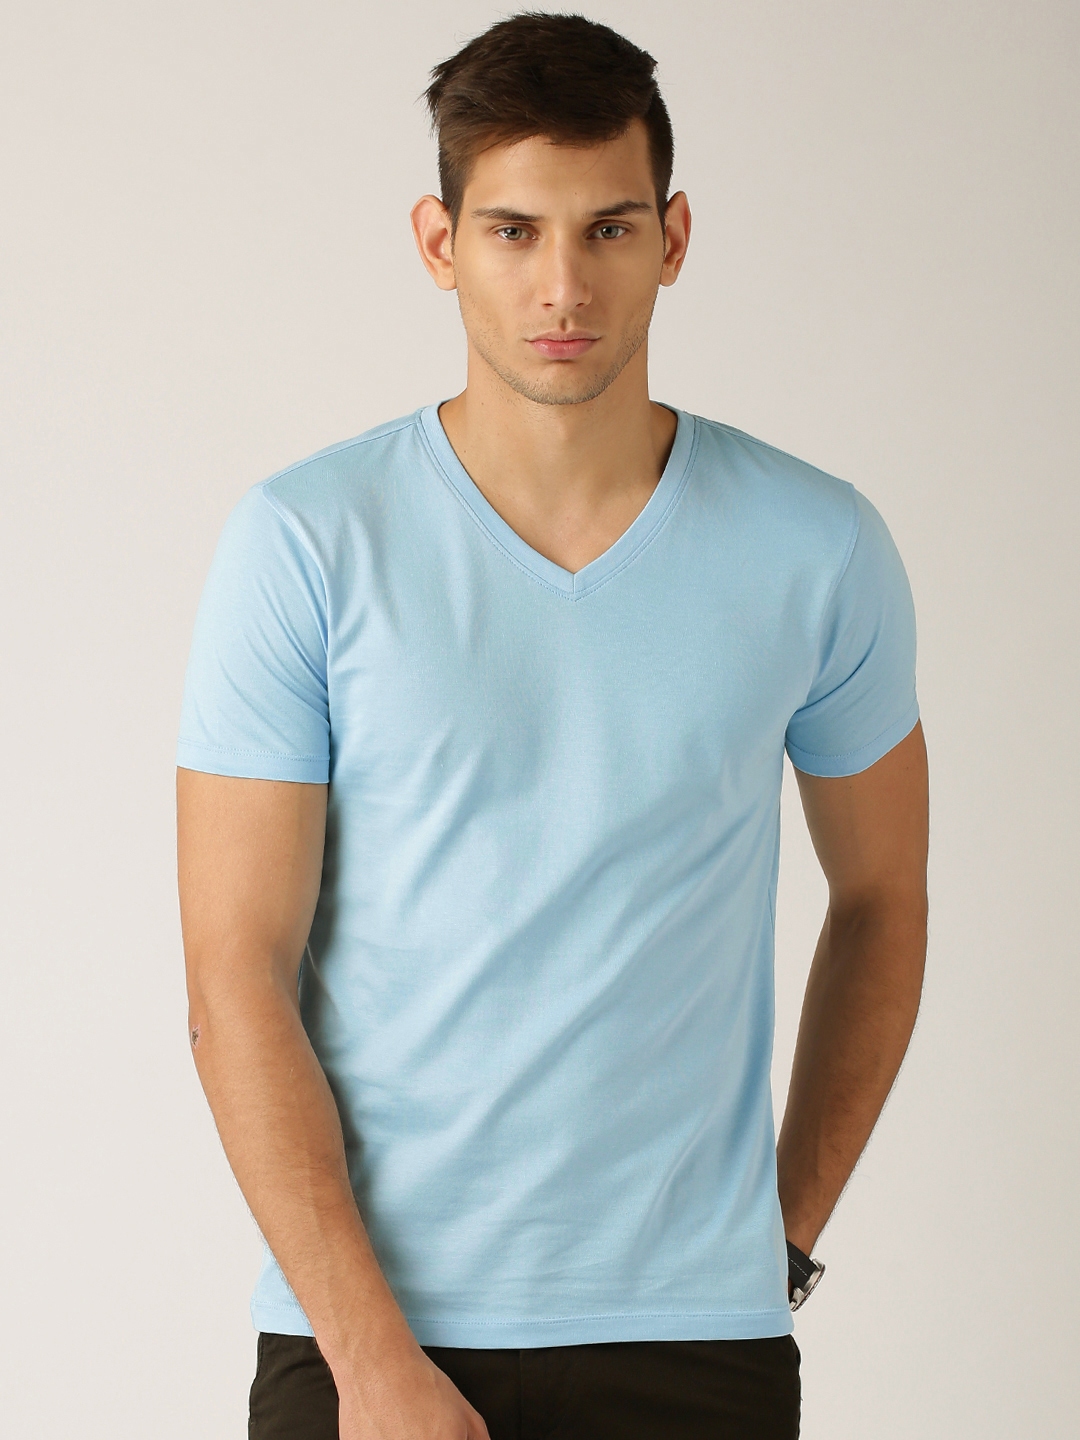 Navy Blue T Shirt For Men Offers Cheap, Save 46% | jlcatj.gob.mx